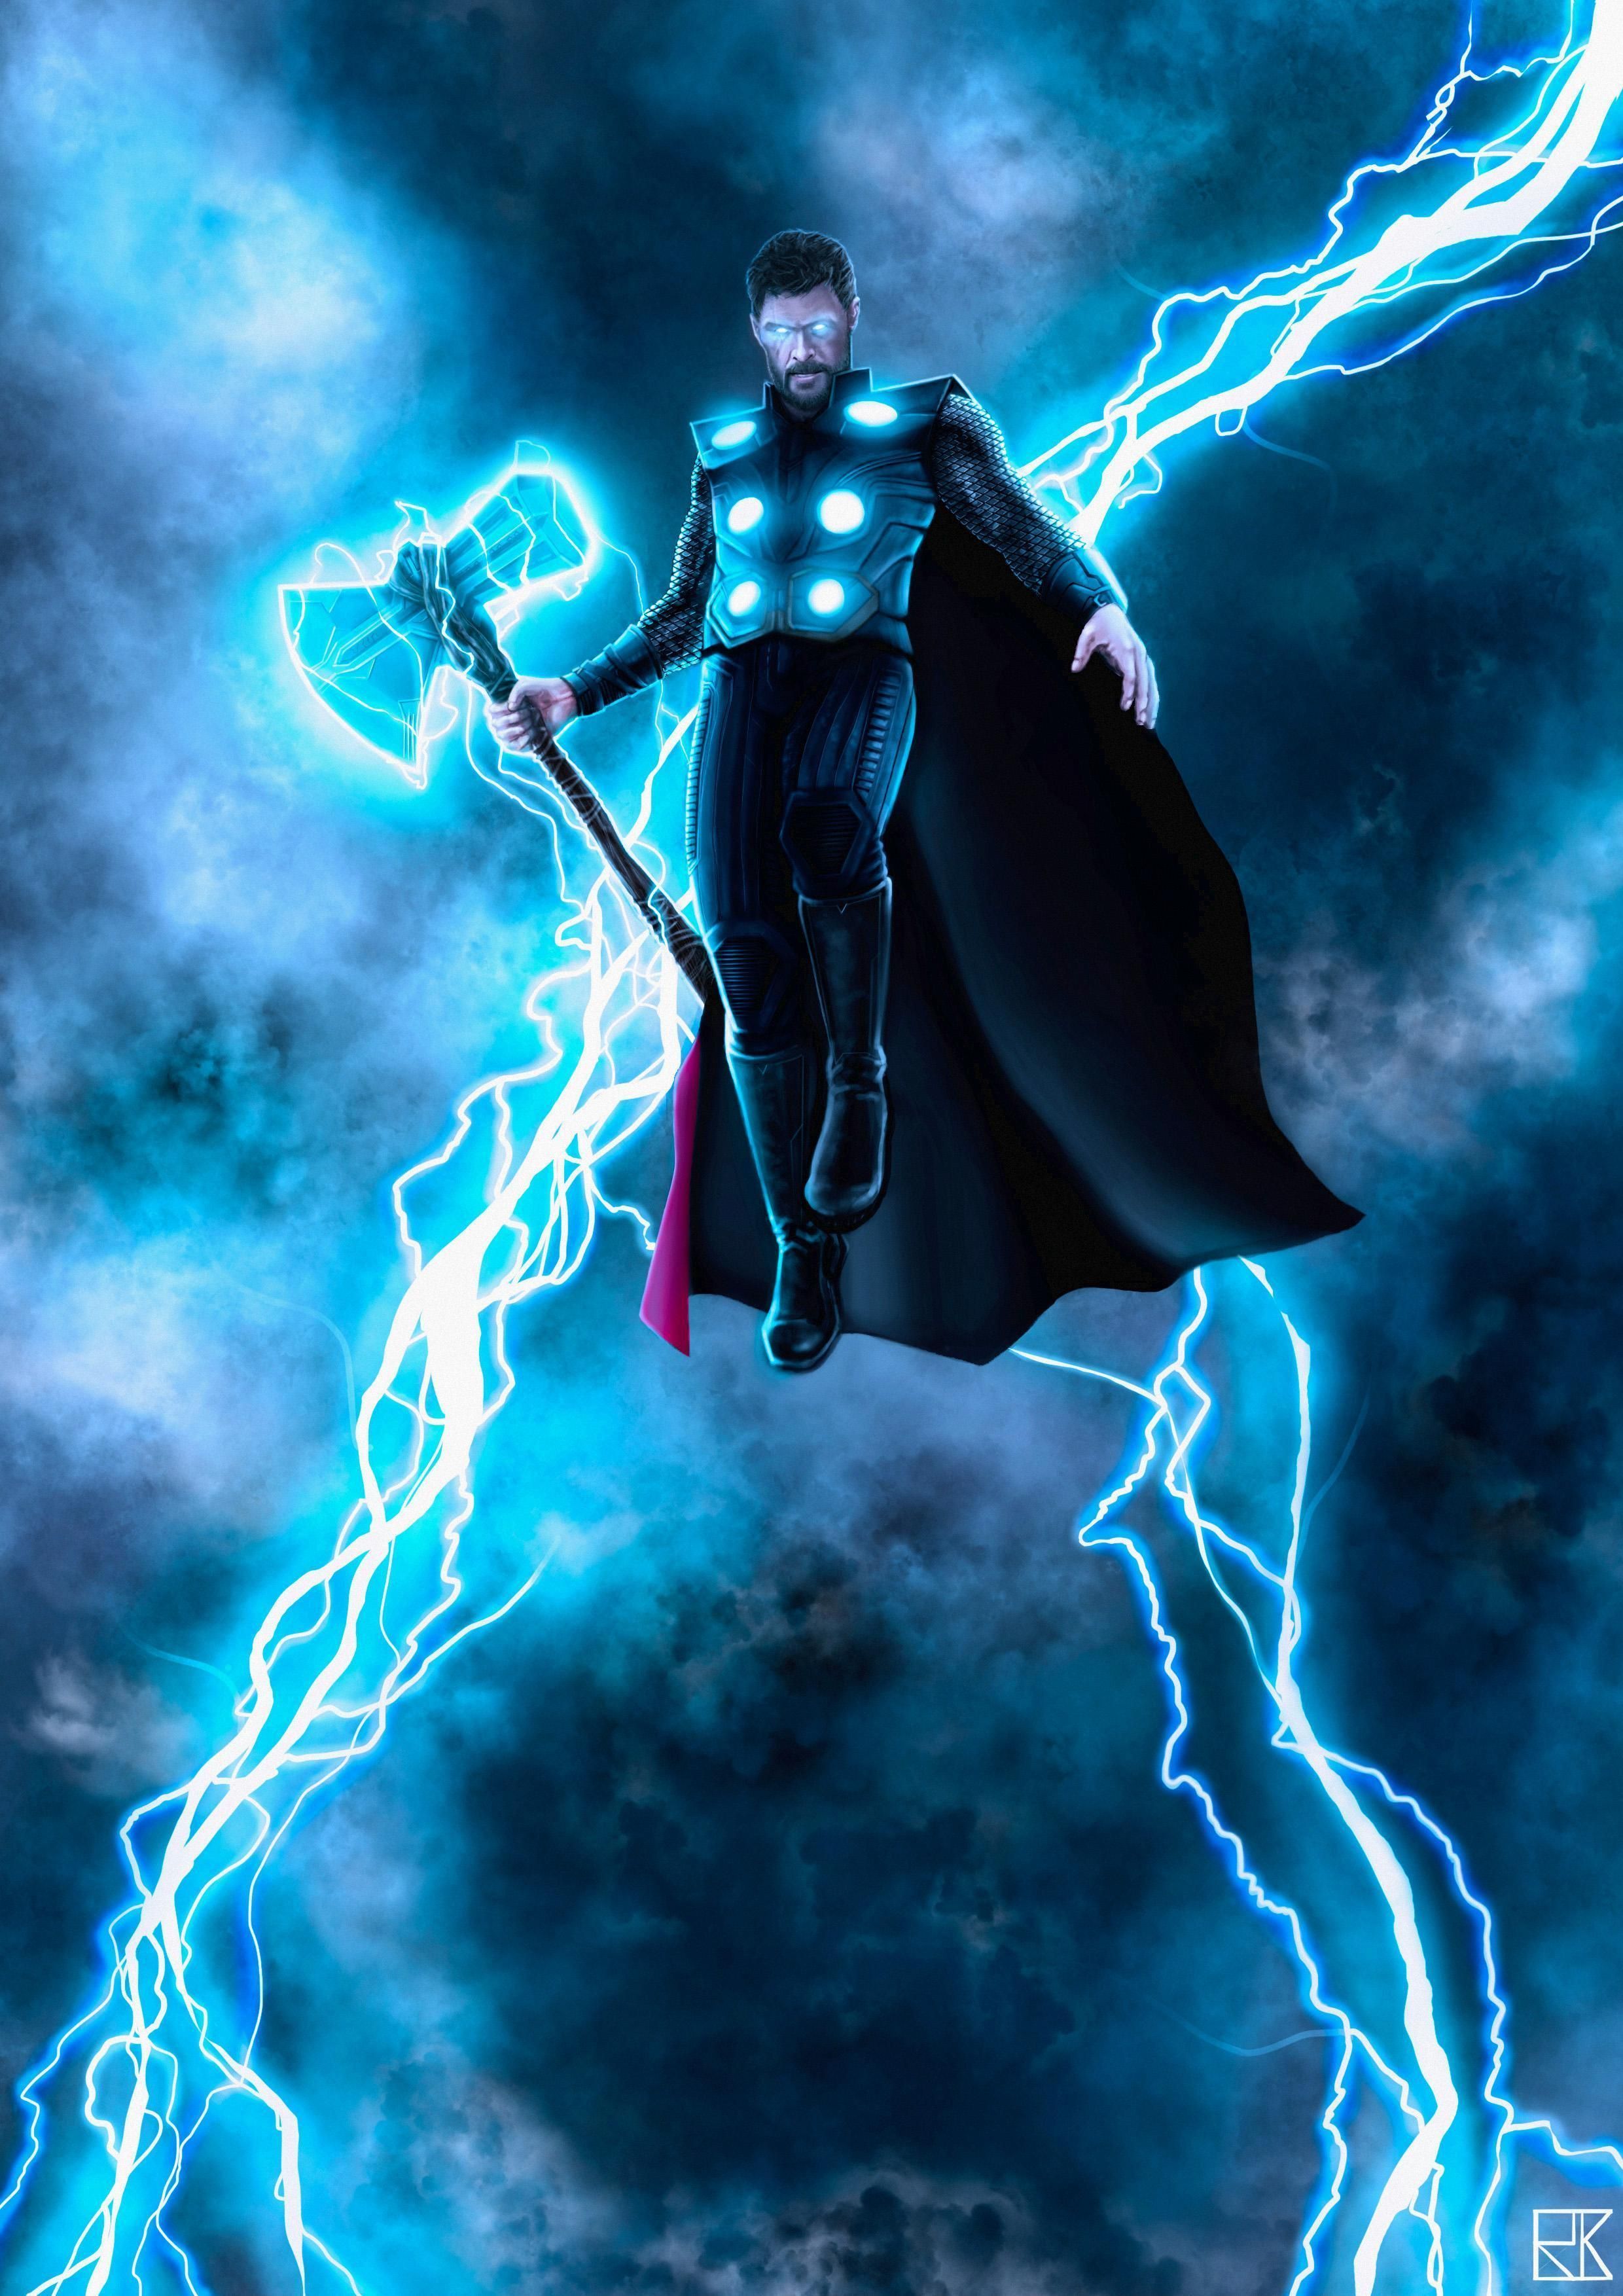 Superhero 4K Wallpaper. Thor.romperswomen.tk. Avengers wallpaper, Thor wallpaper, Lightning mcqueen drawing